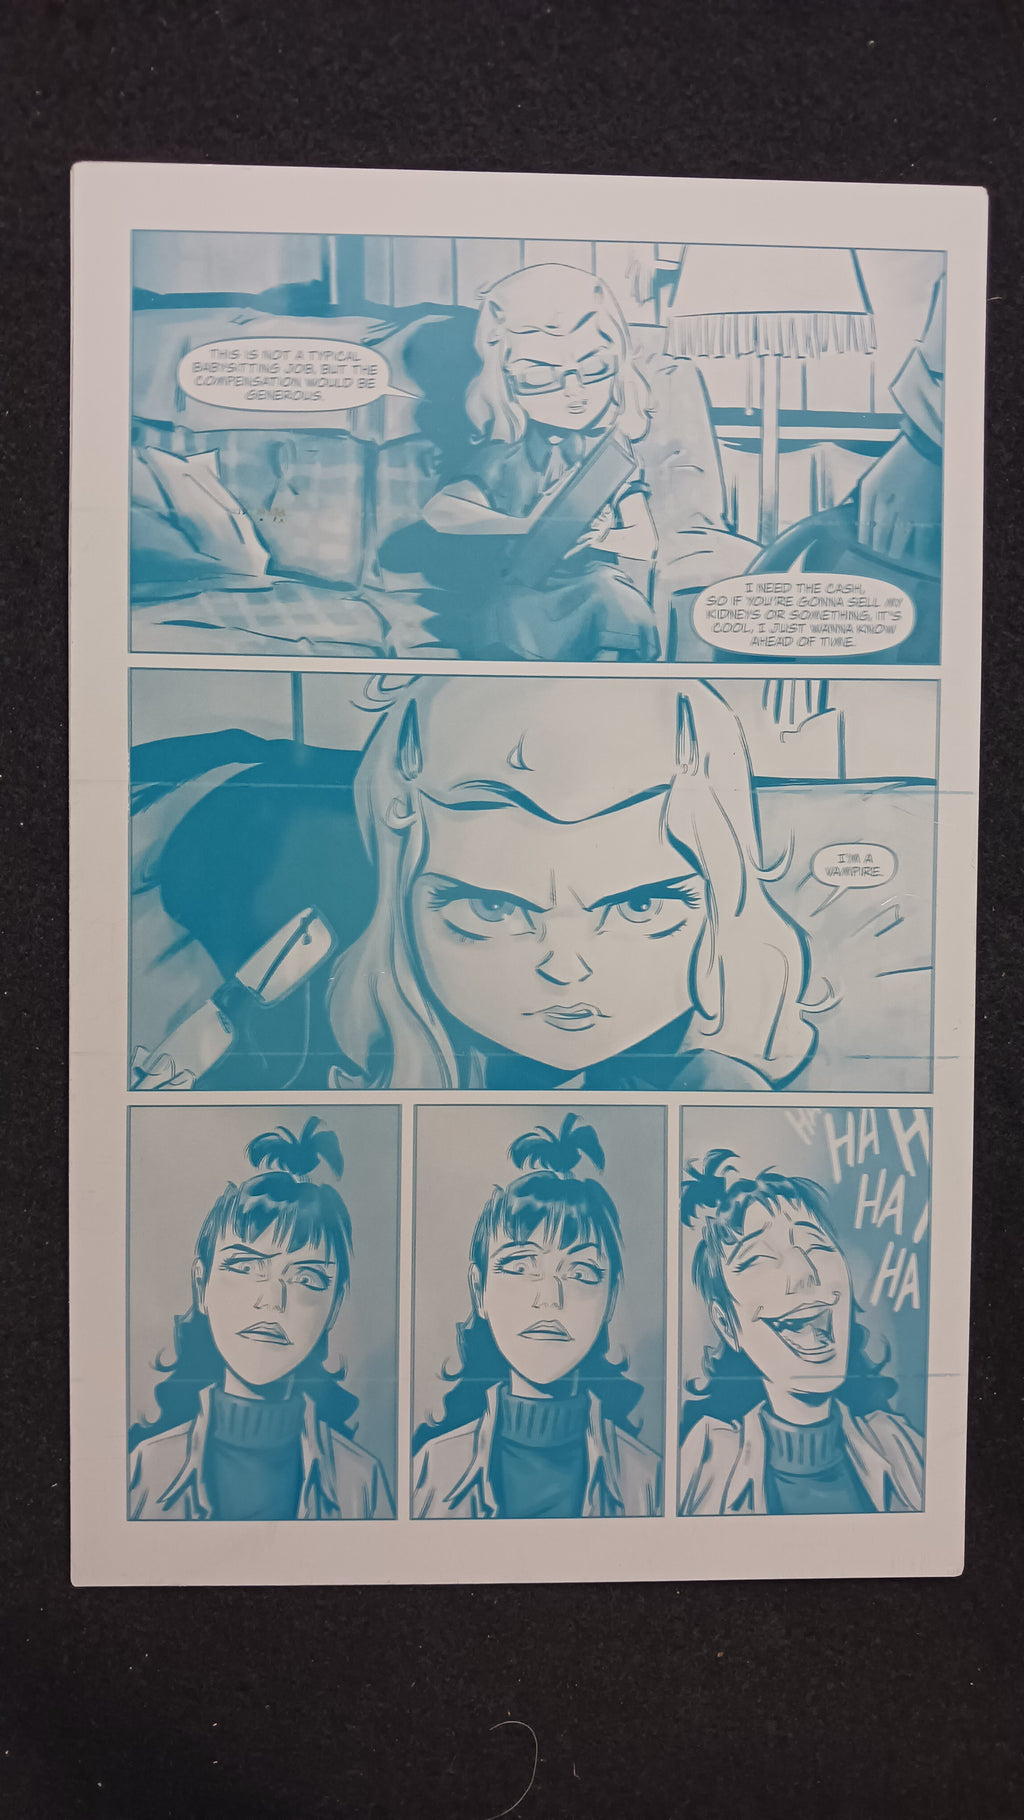 She Bites Trade Paperback - Page 20 - PRESSWORKS - Comic Art - Printer Plate - Cyan